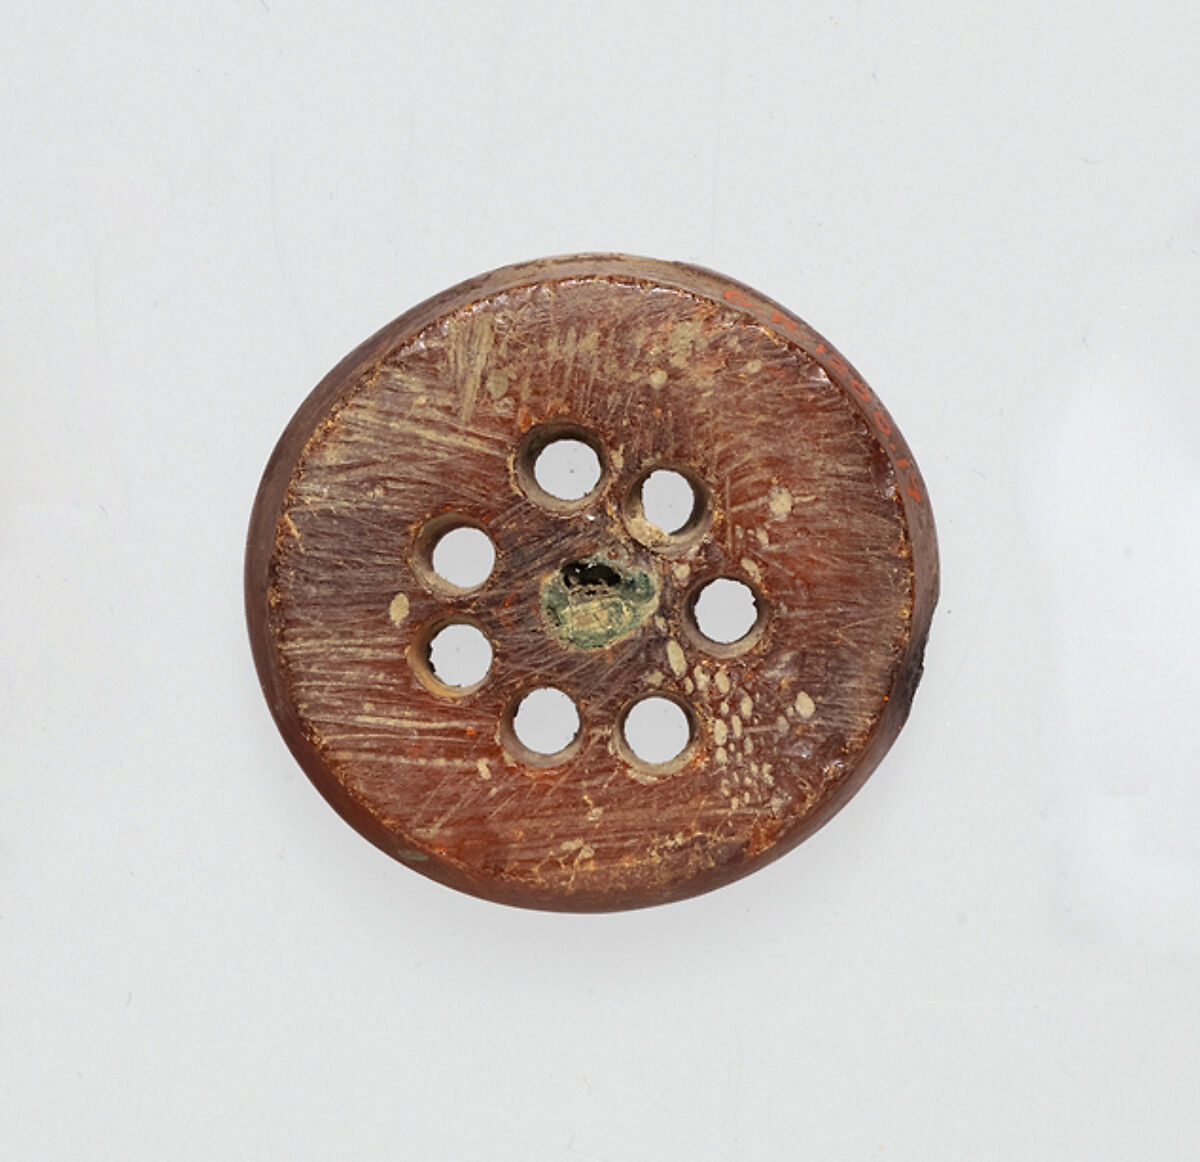 Segment from a bronze fibula (safety pin), Amber, Etruscan 